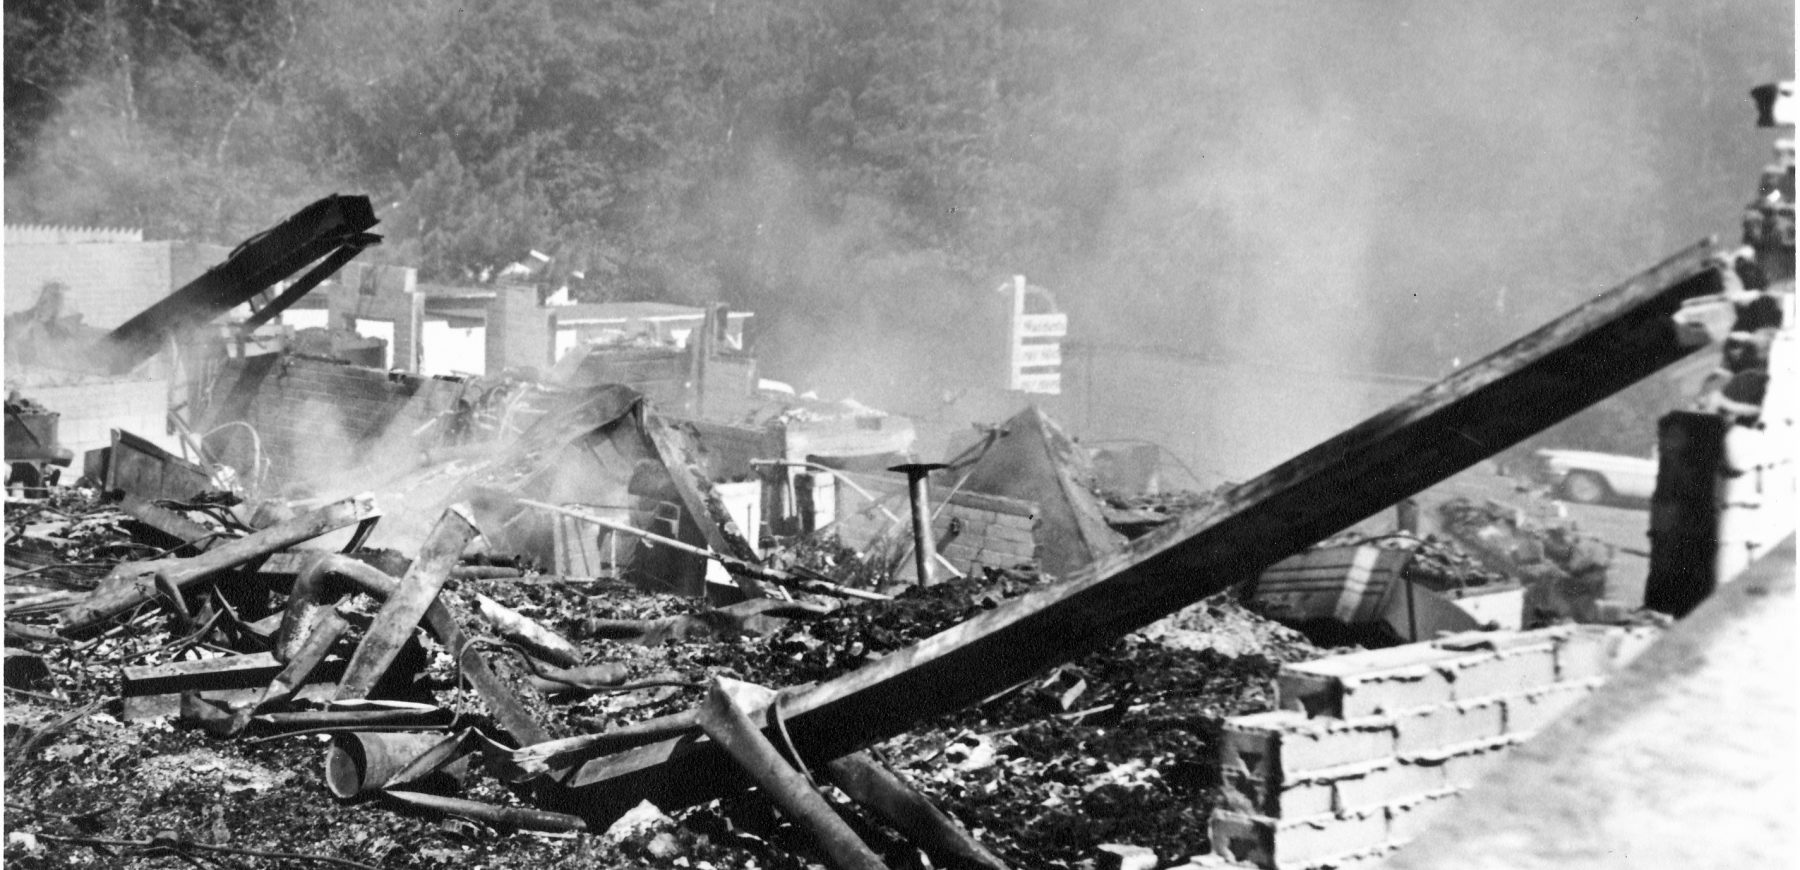 Old Madden's Inn Fire July 3, 1964